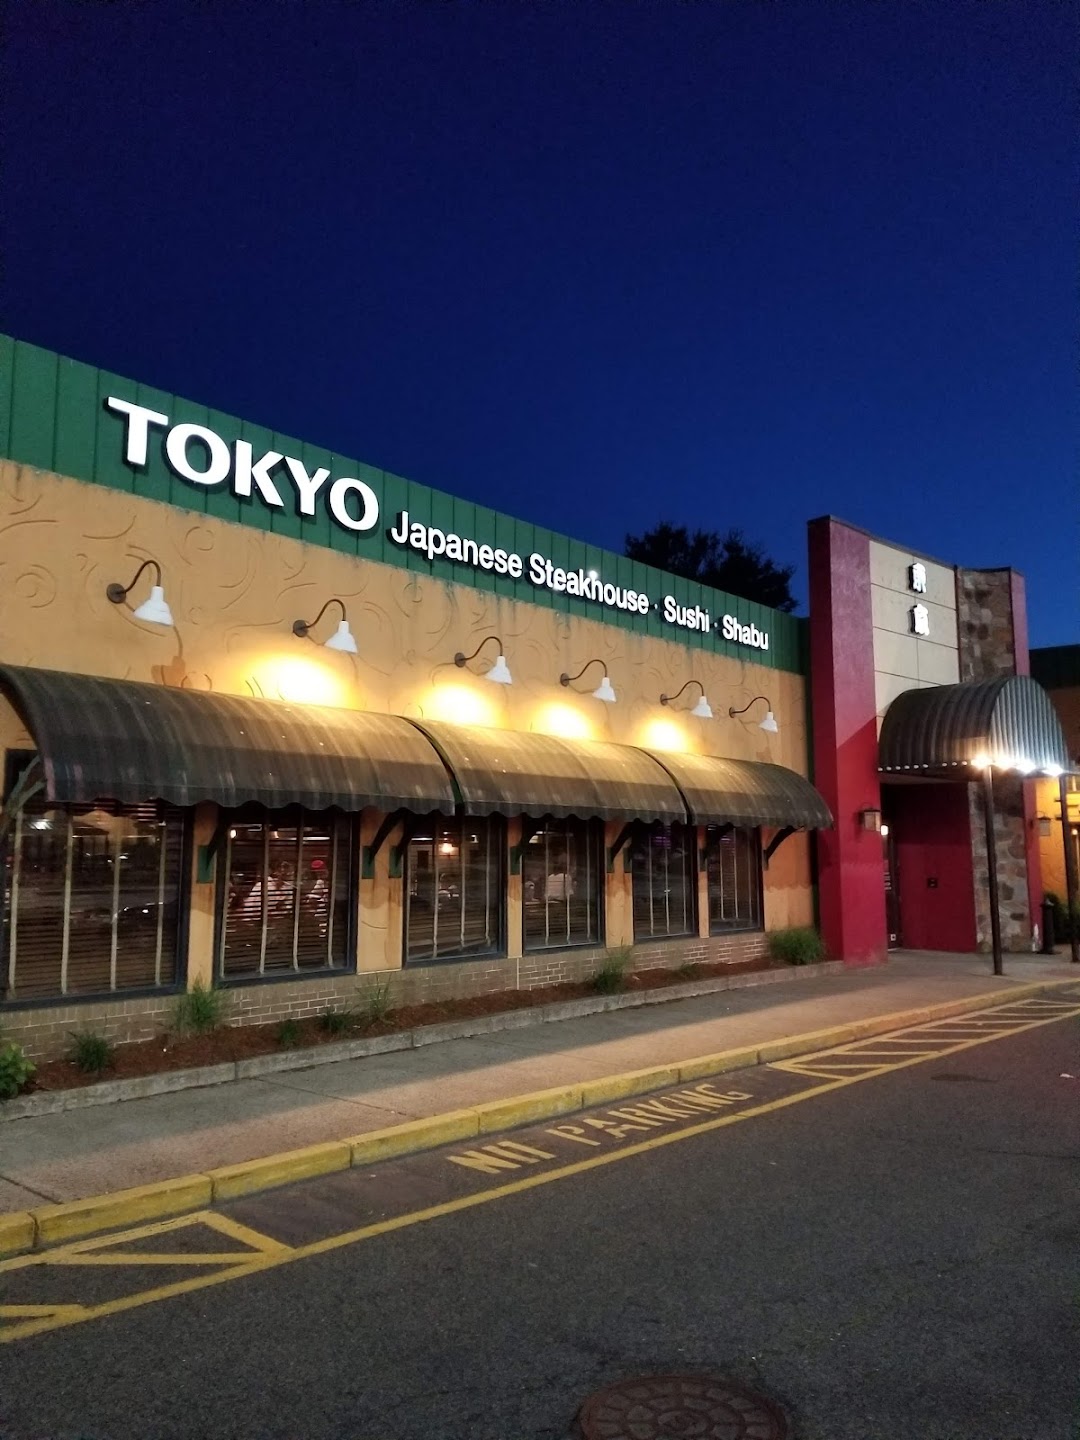 Tokyo Japanese Steak House